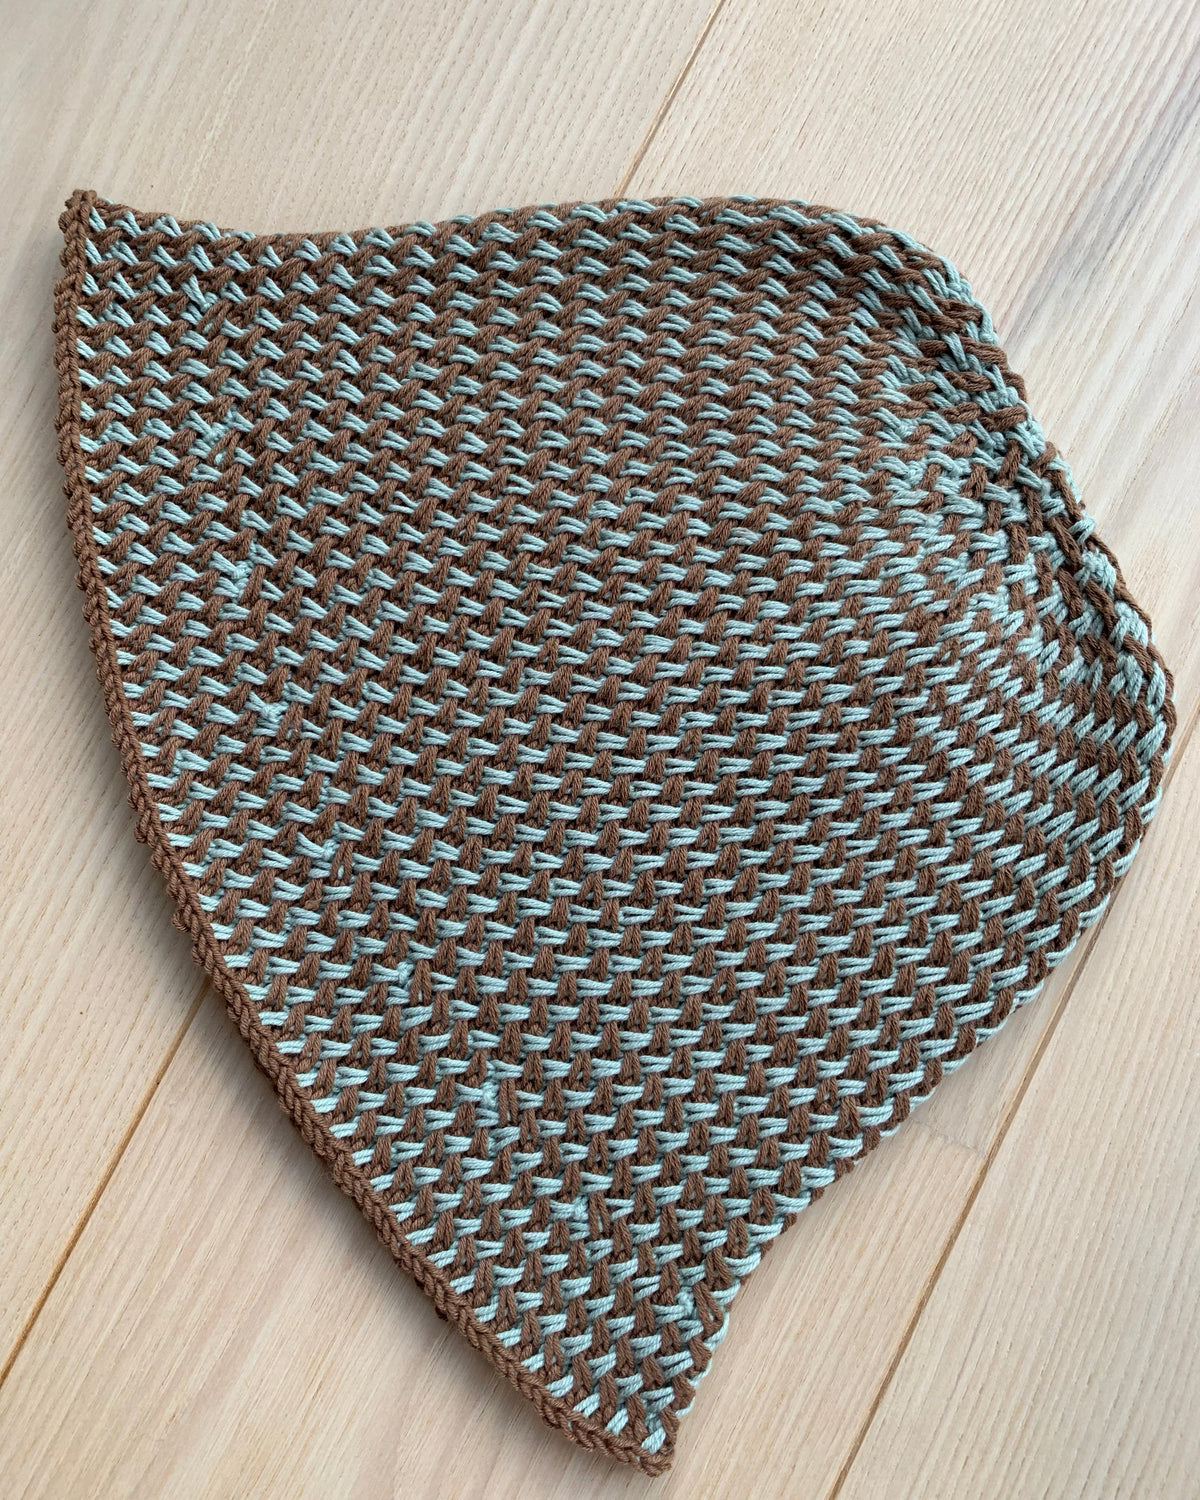 Coco Hat English Popknit knitting pattern